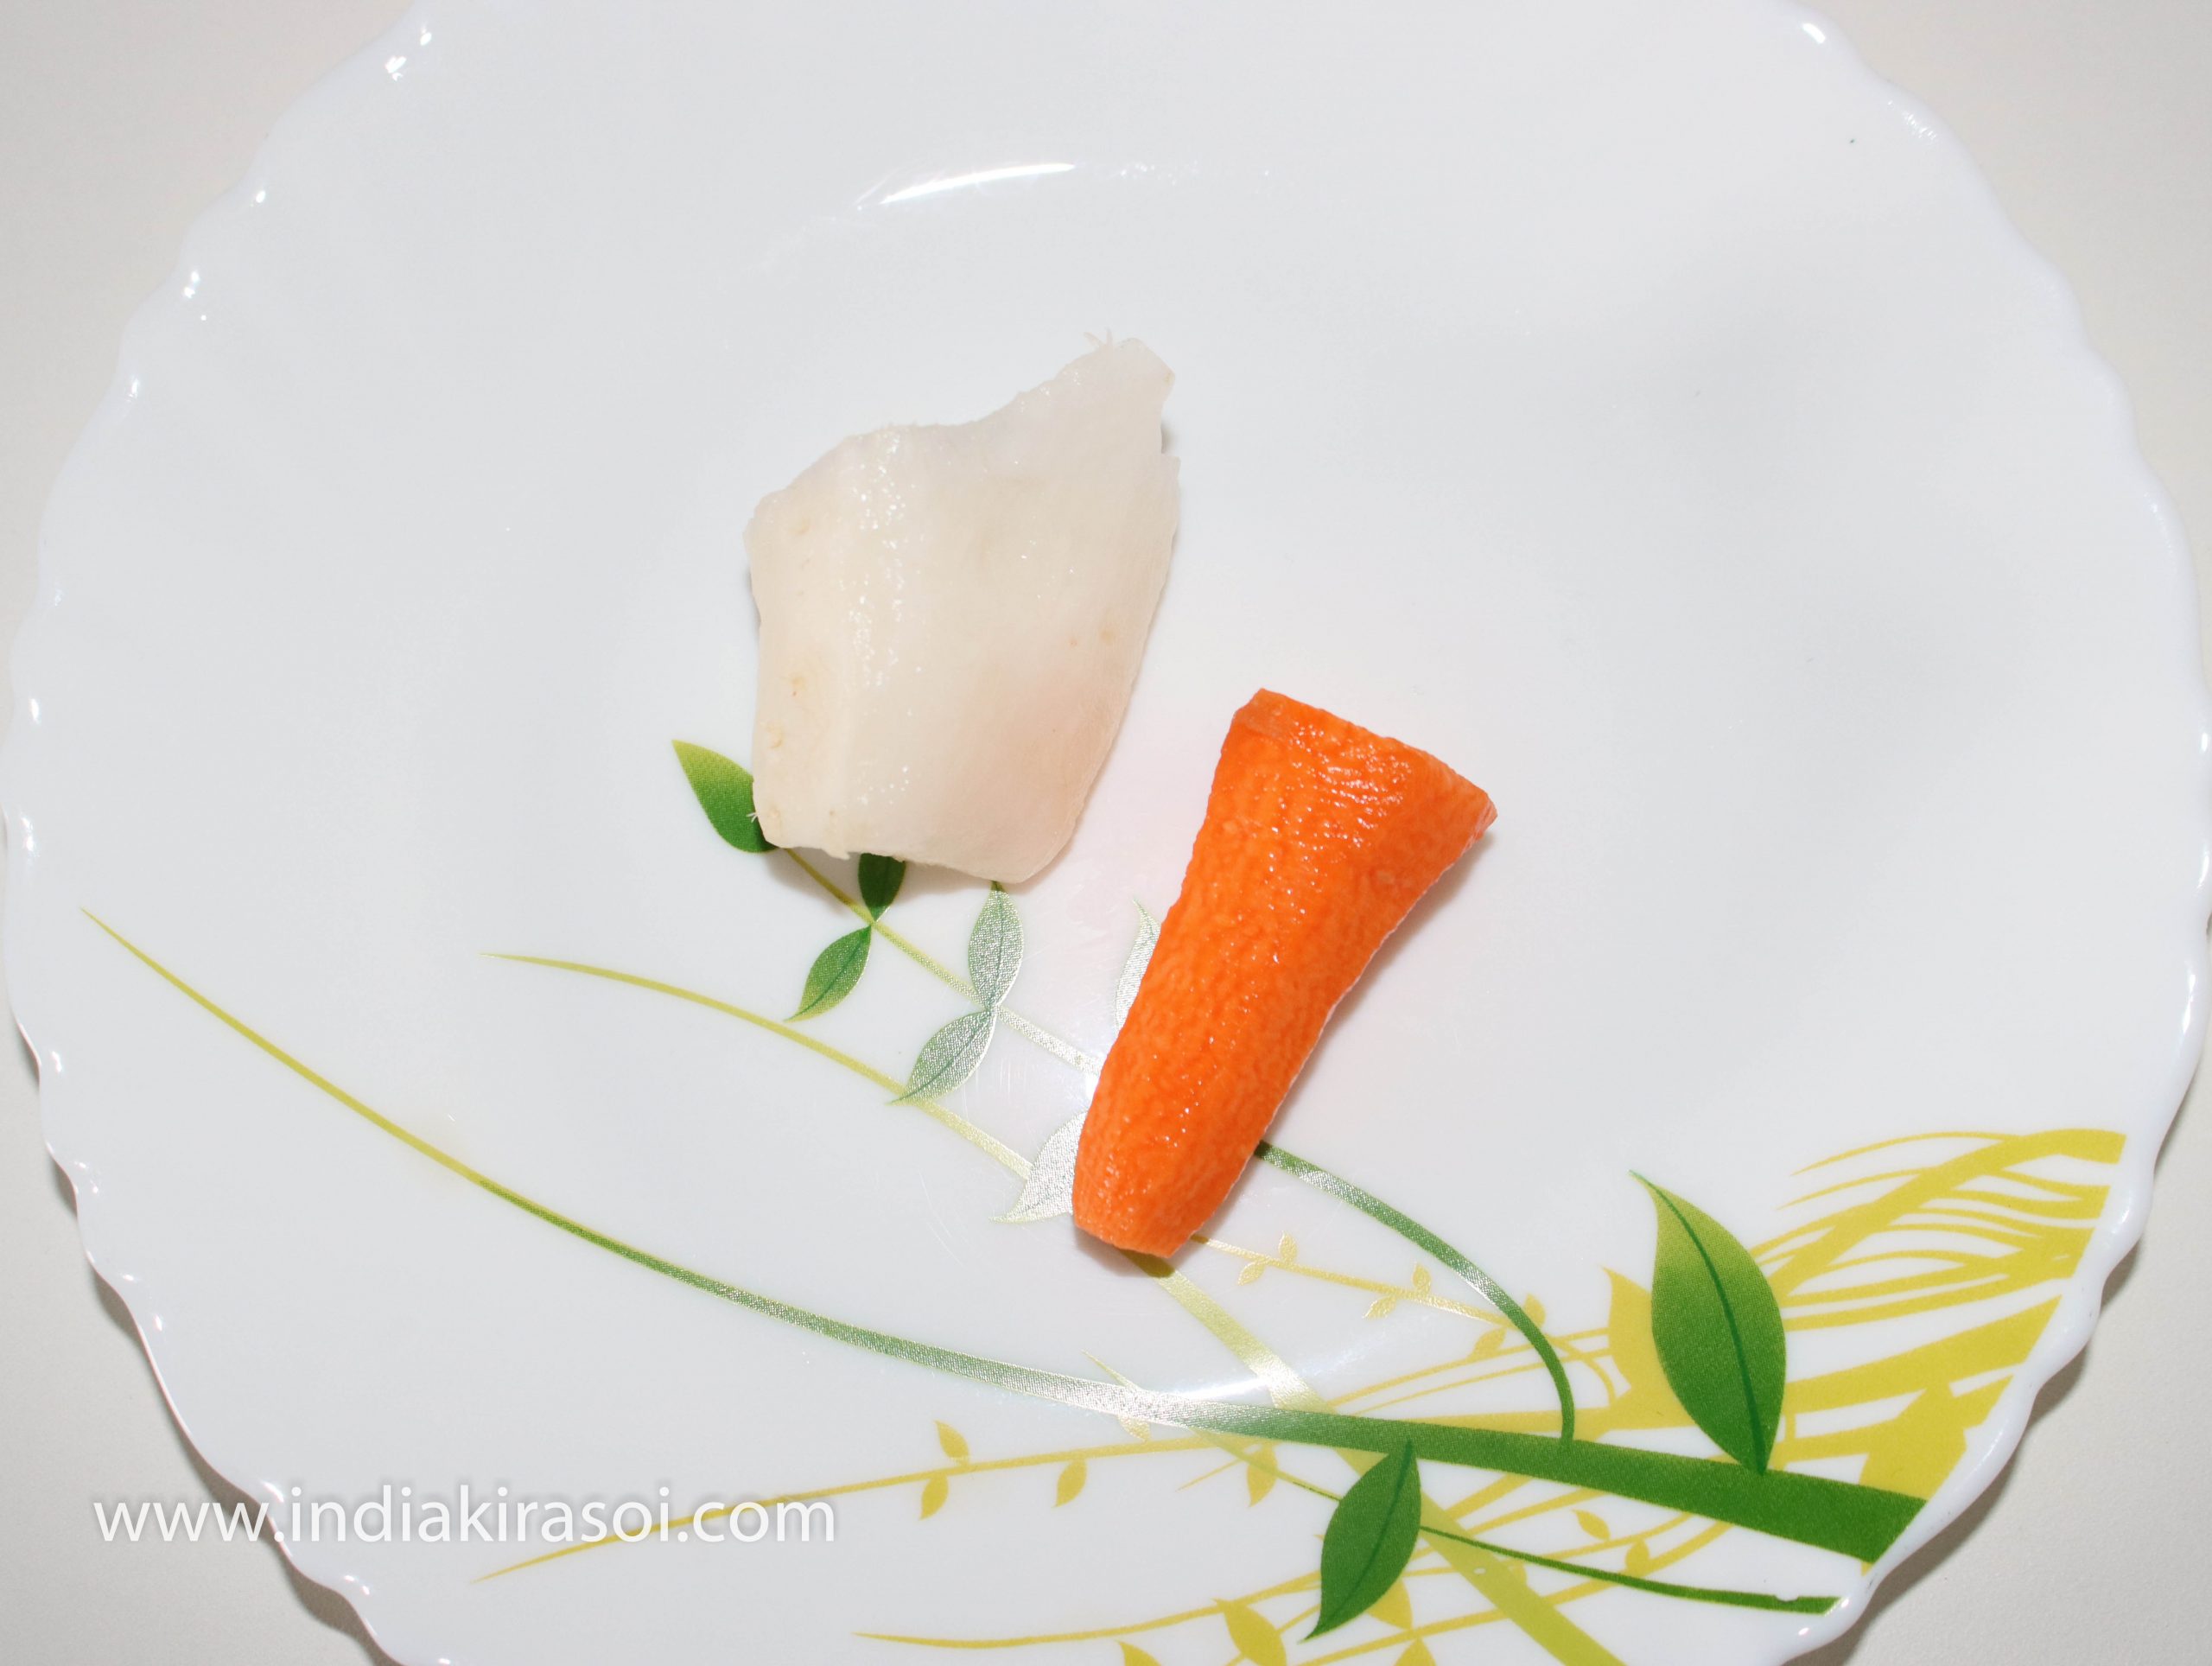 Take 50 grams of carrots, 50 grams of radish.